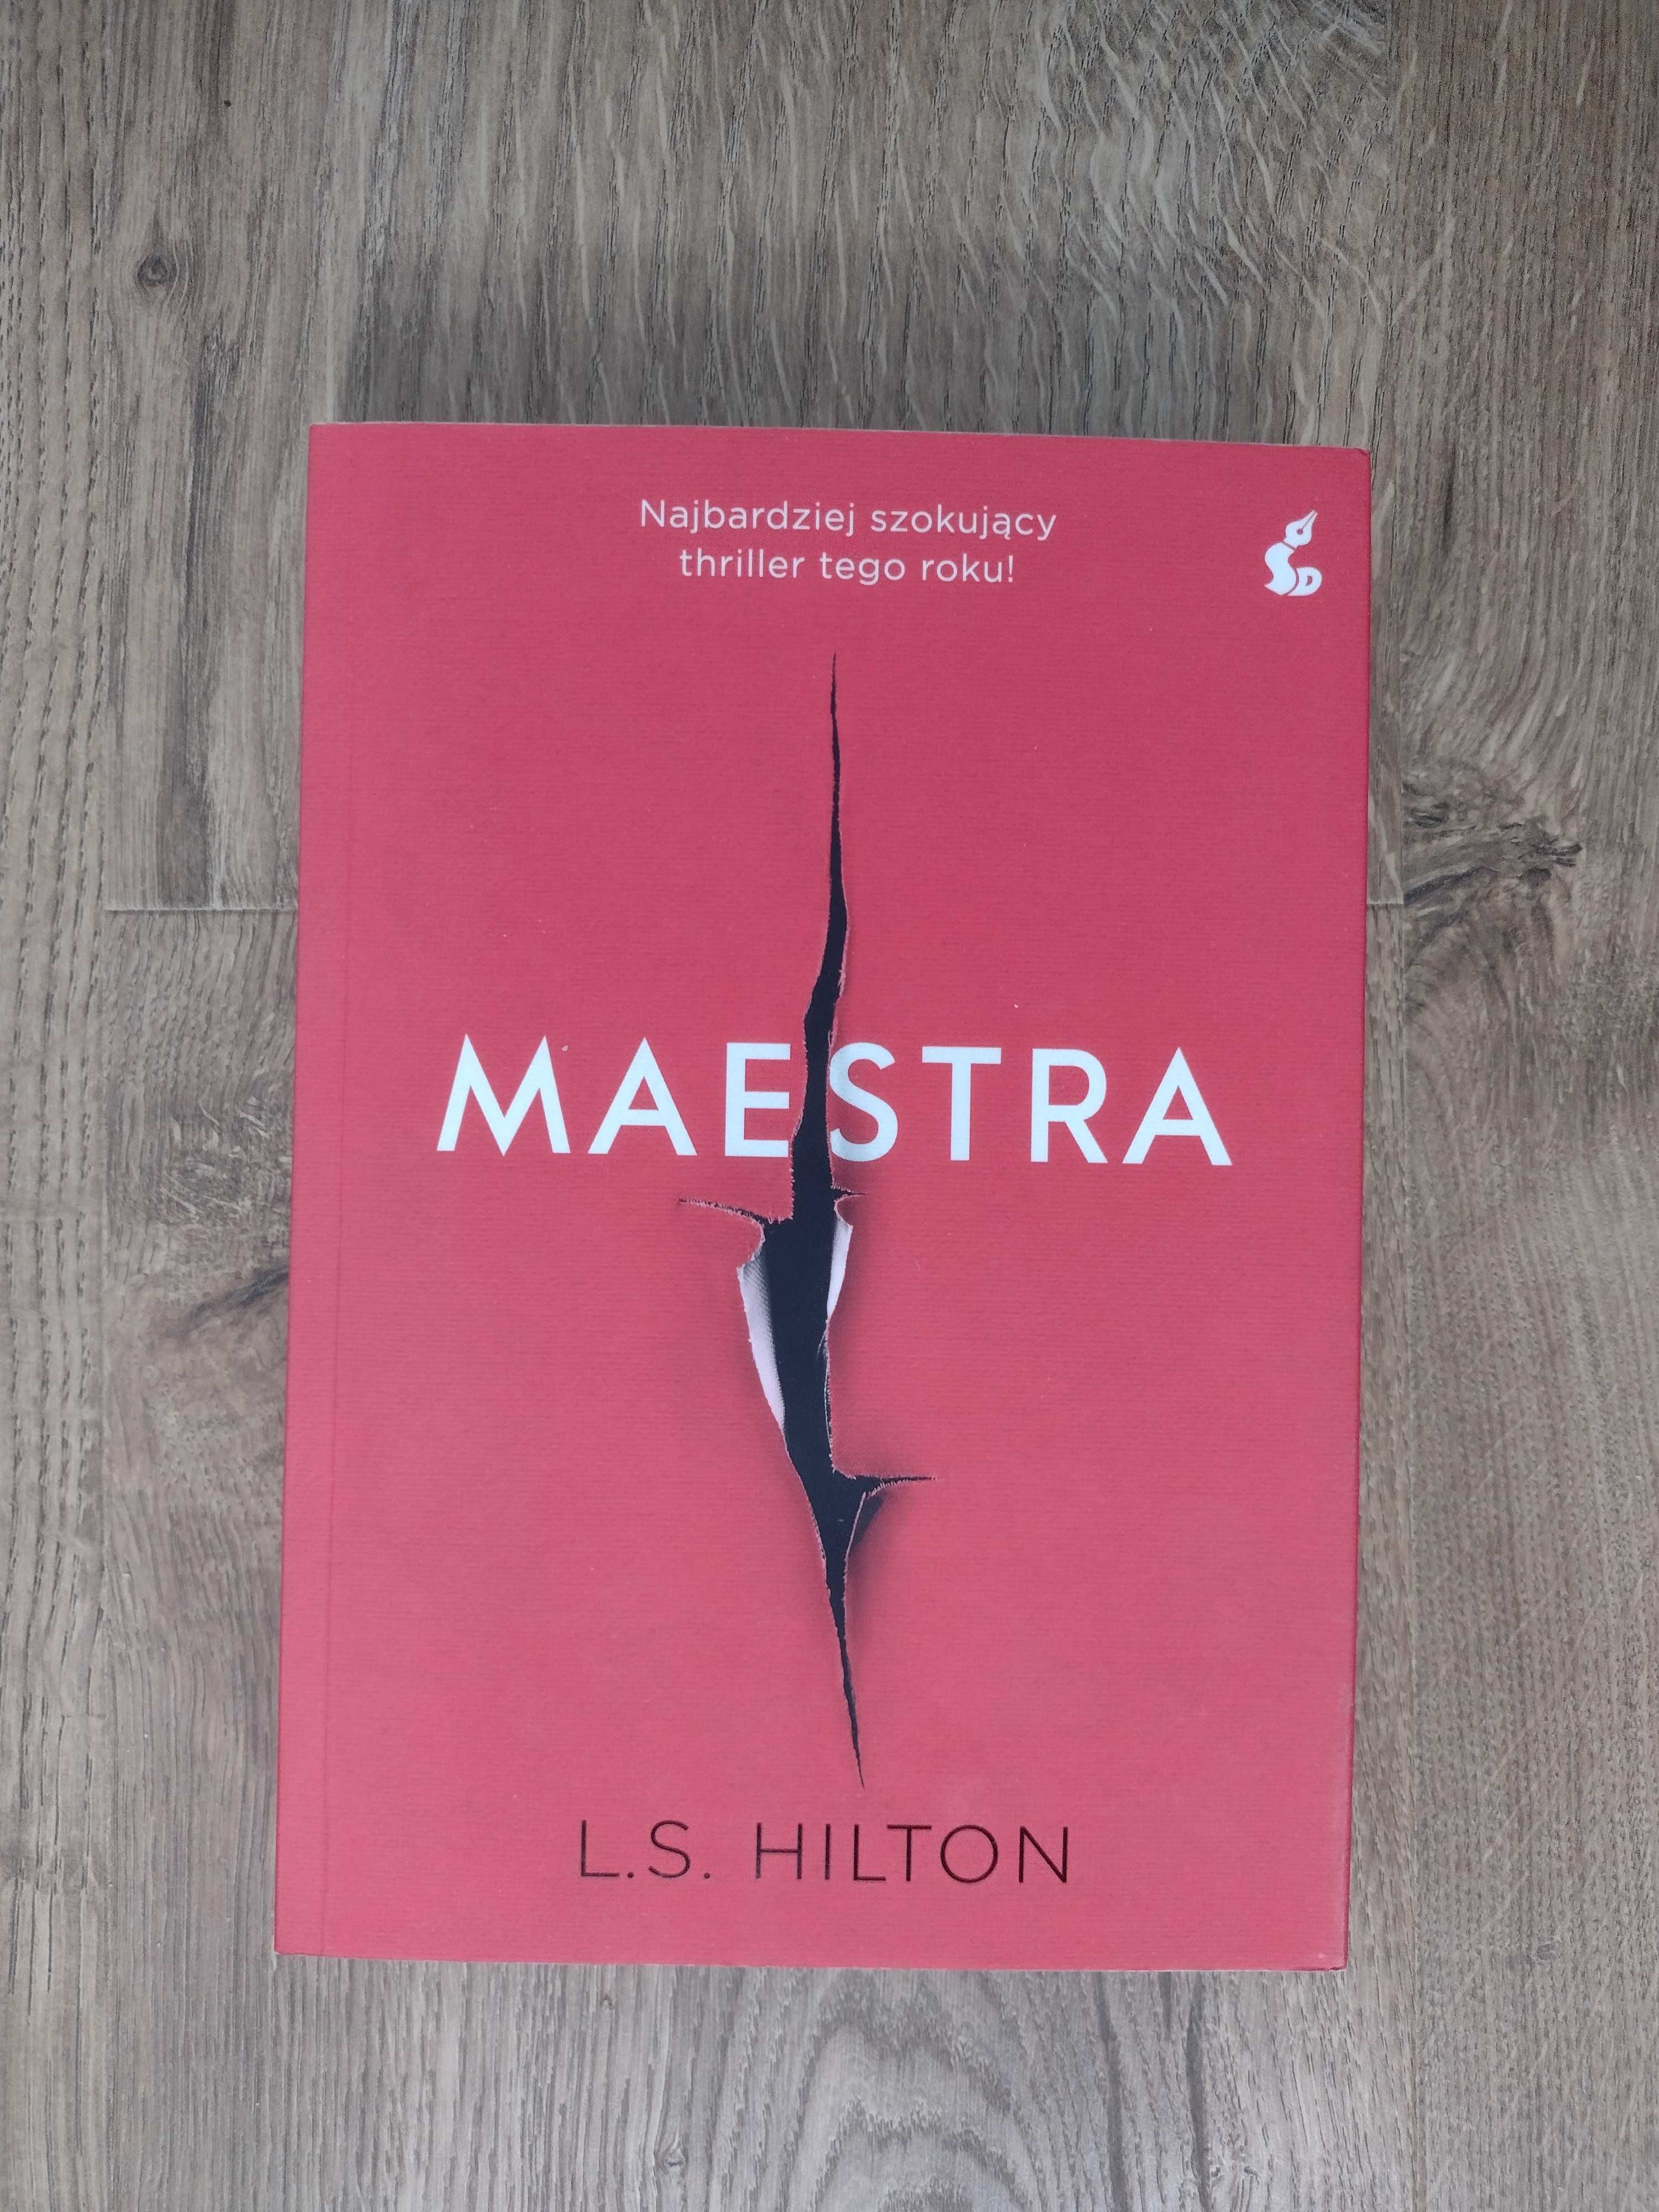 L.S.Hilton - Maestra - książka - jak nowa